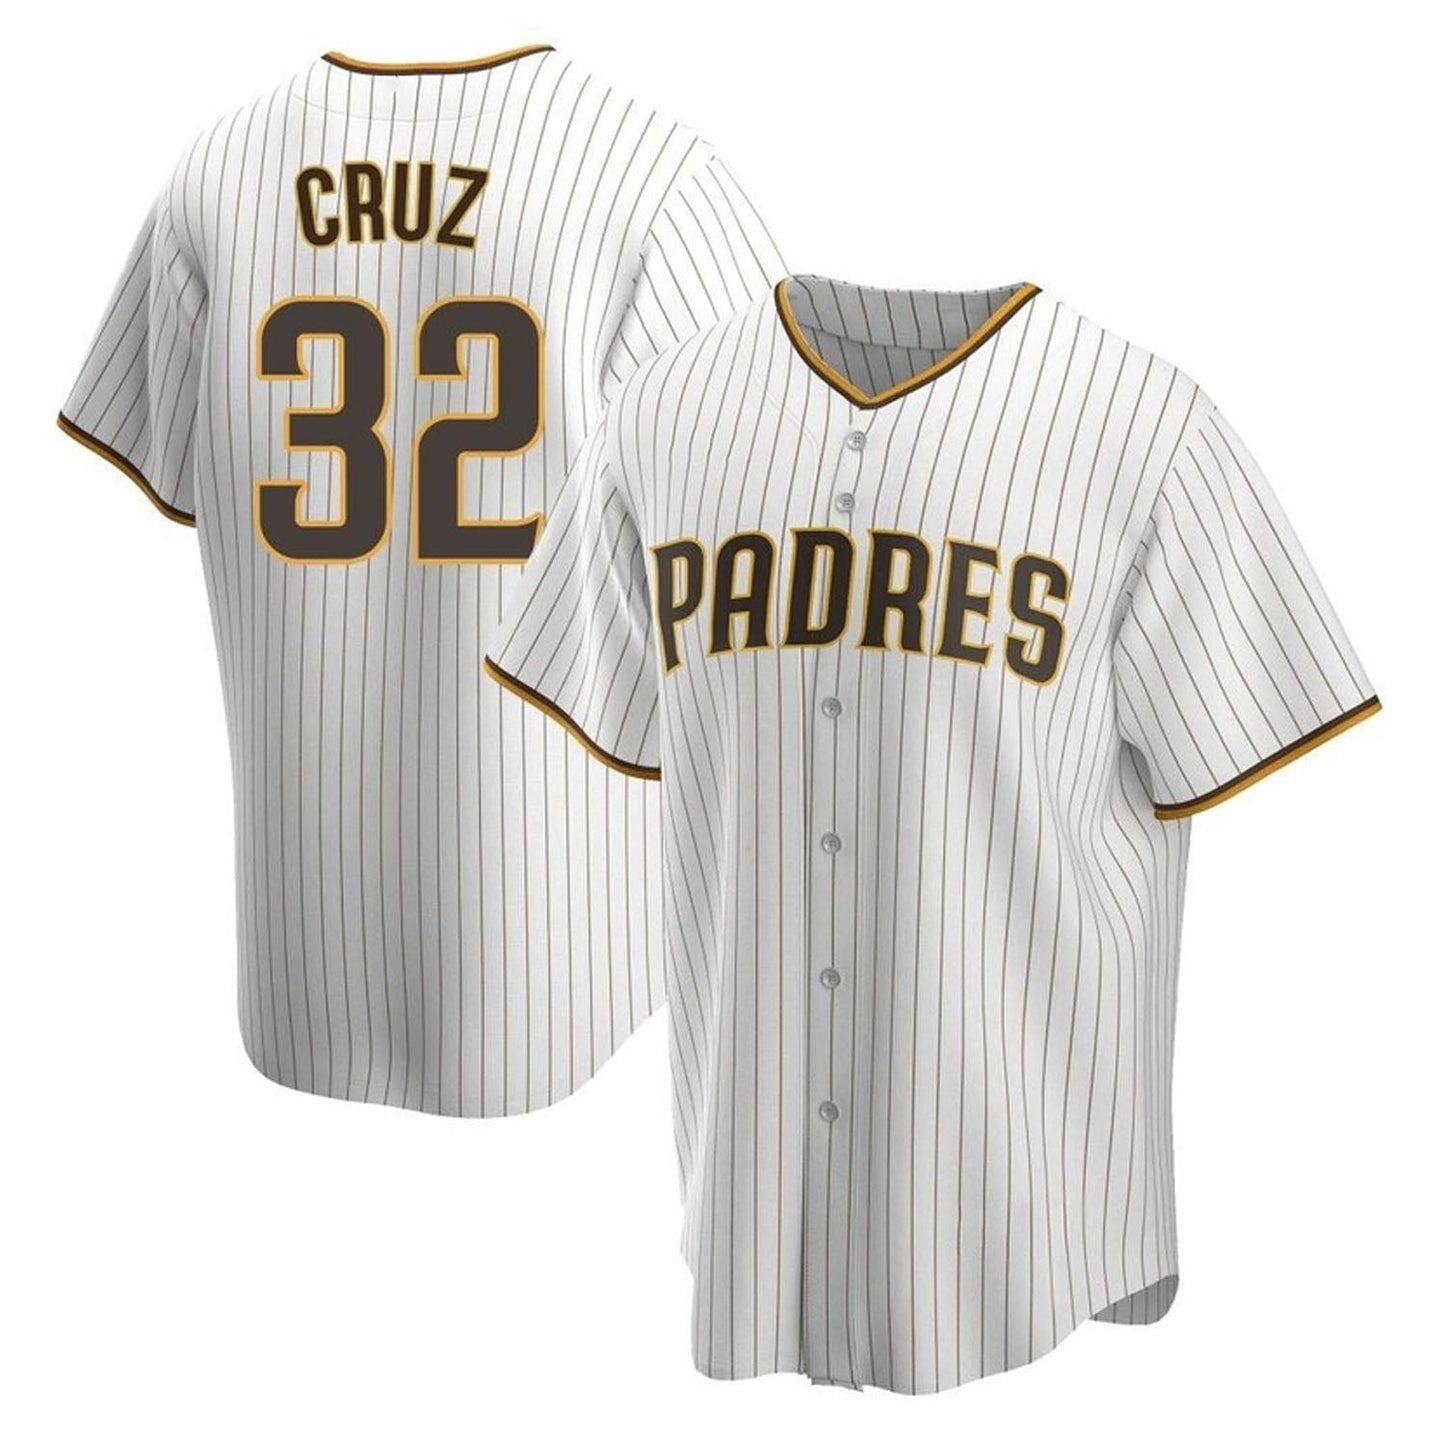 MLB Nelson Cruz San Diego Padres 32 Jersey